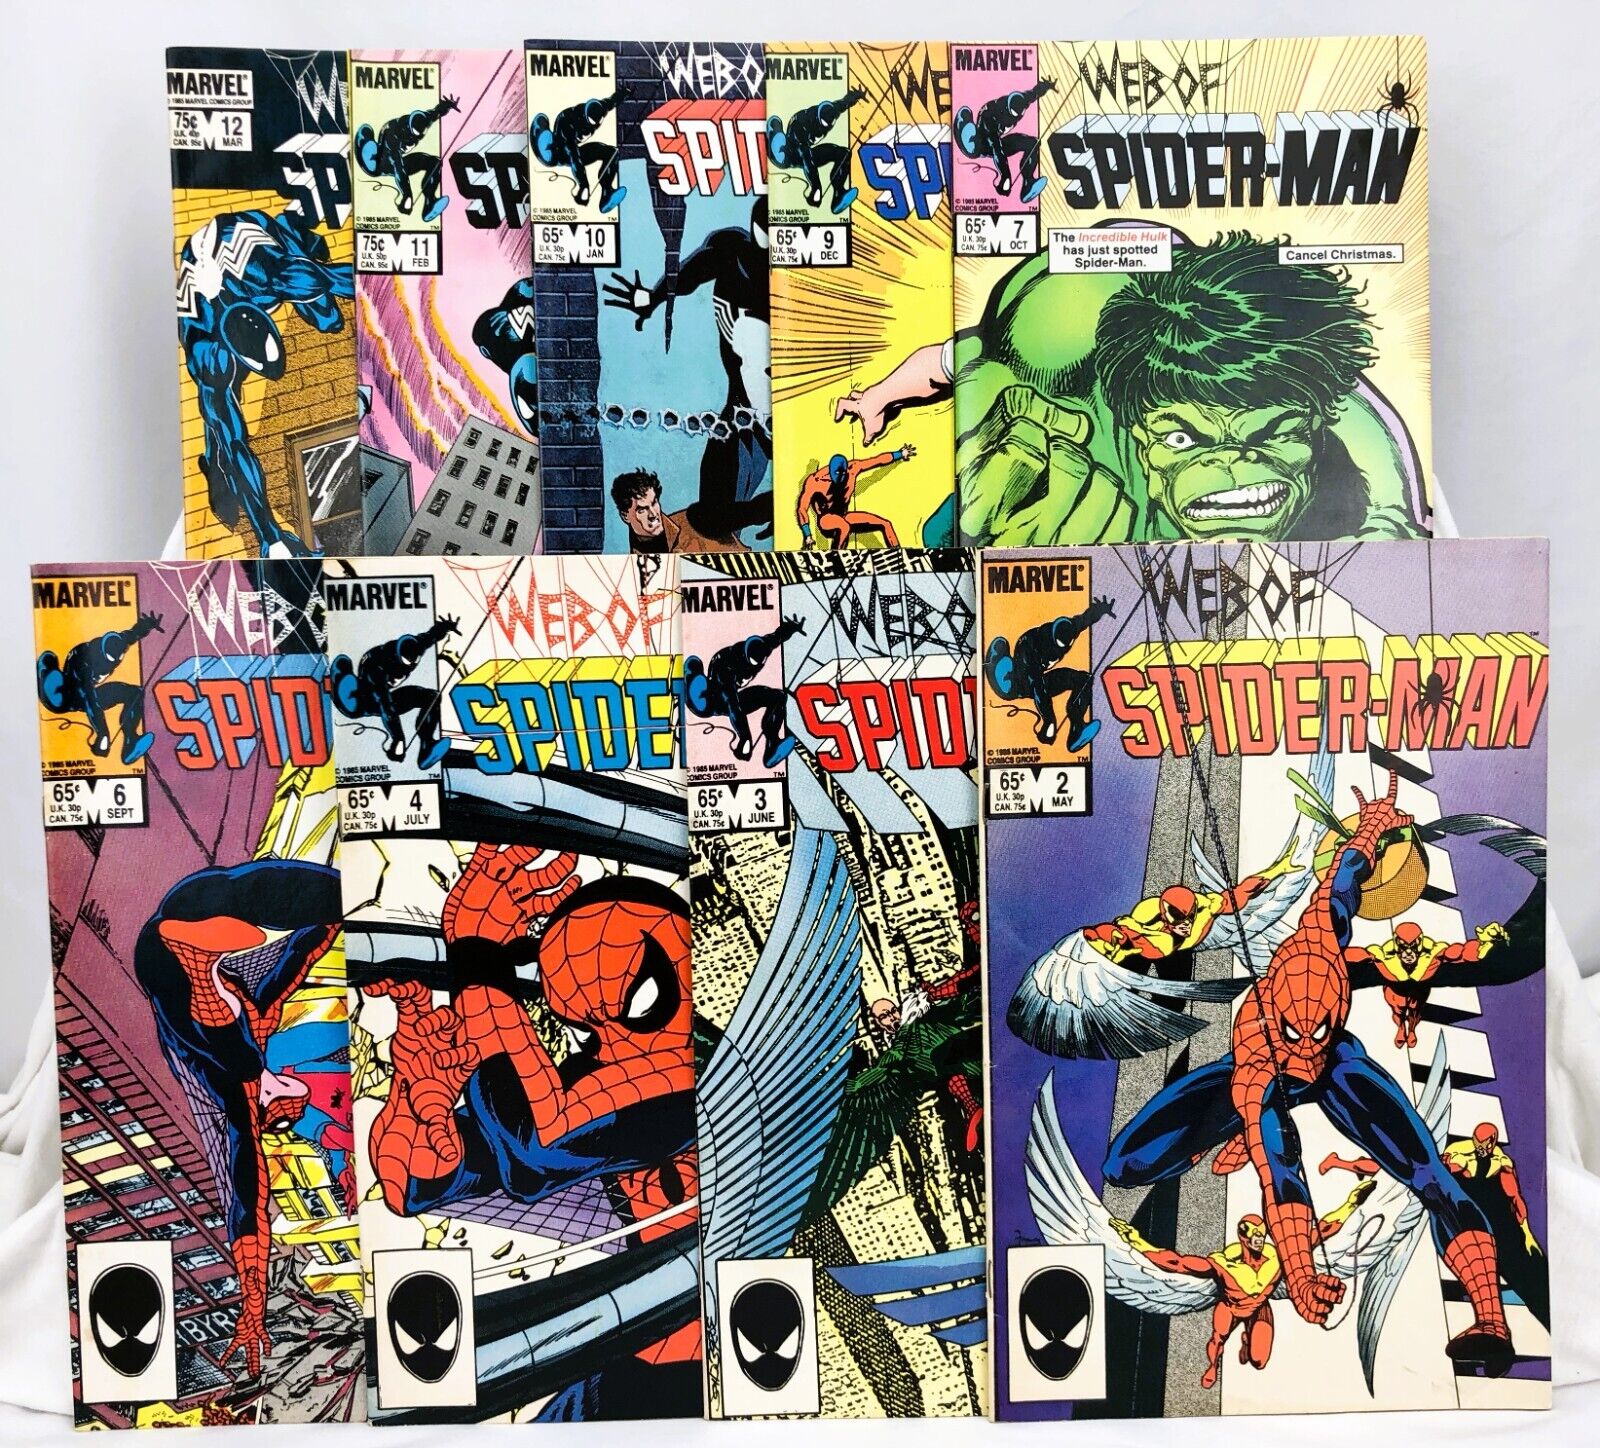 Web of Spider-Man #2-4, 6-7, 9-12 (1985-86, Marvel) 9 Issue Lot